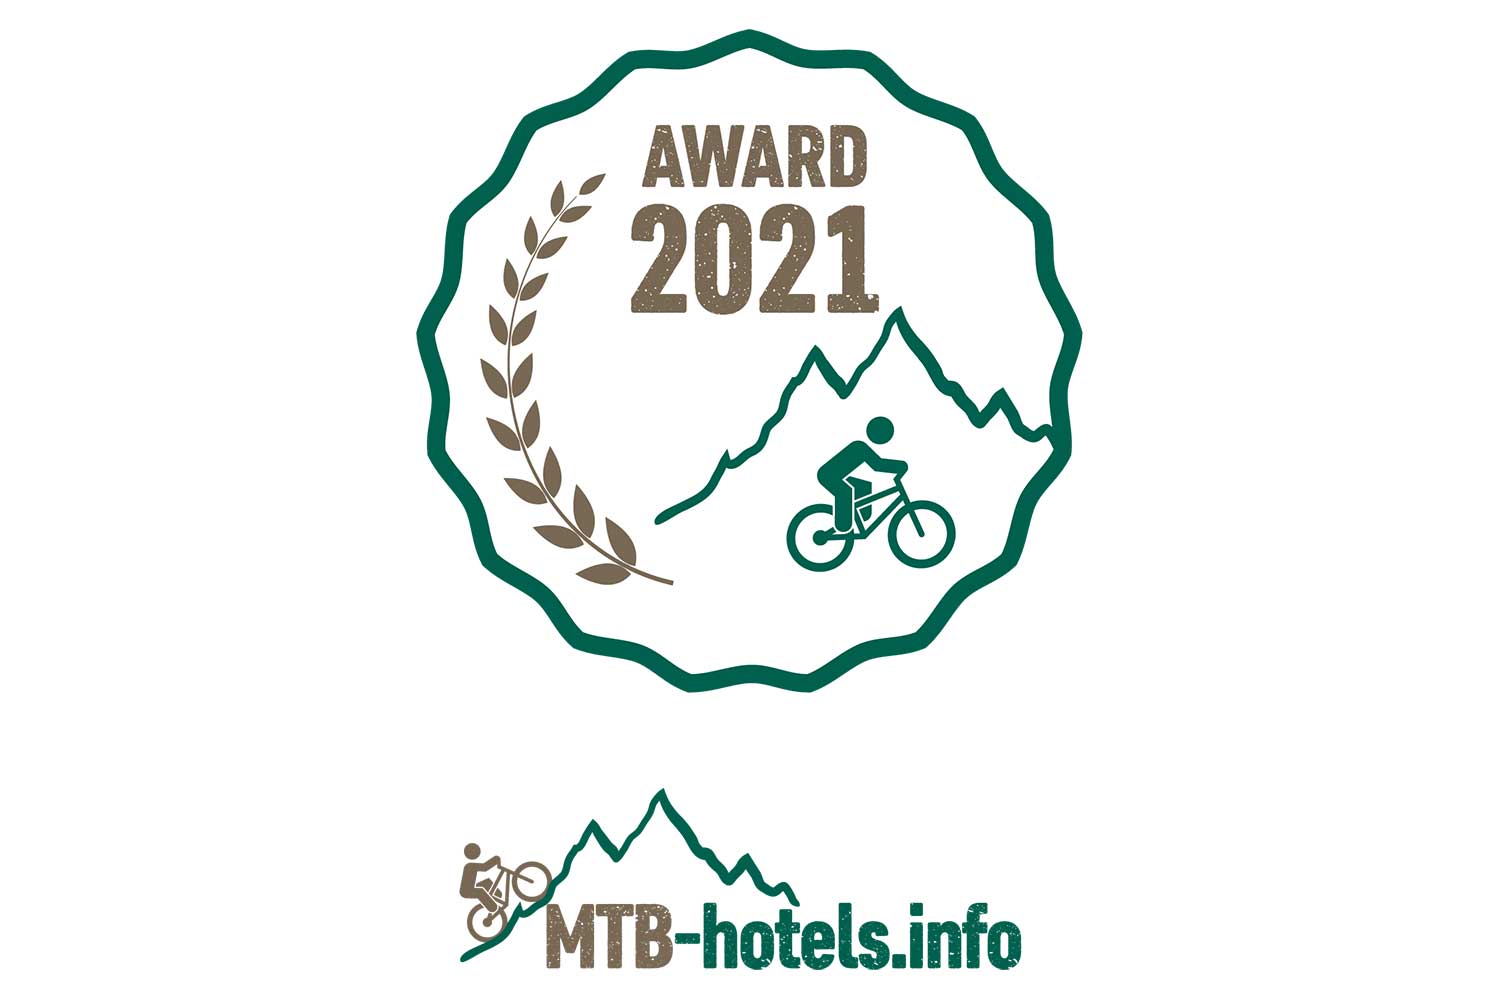 MTB-hotels.info Award 2021